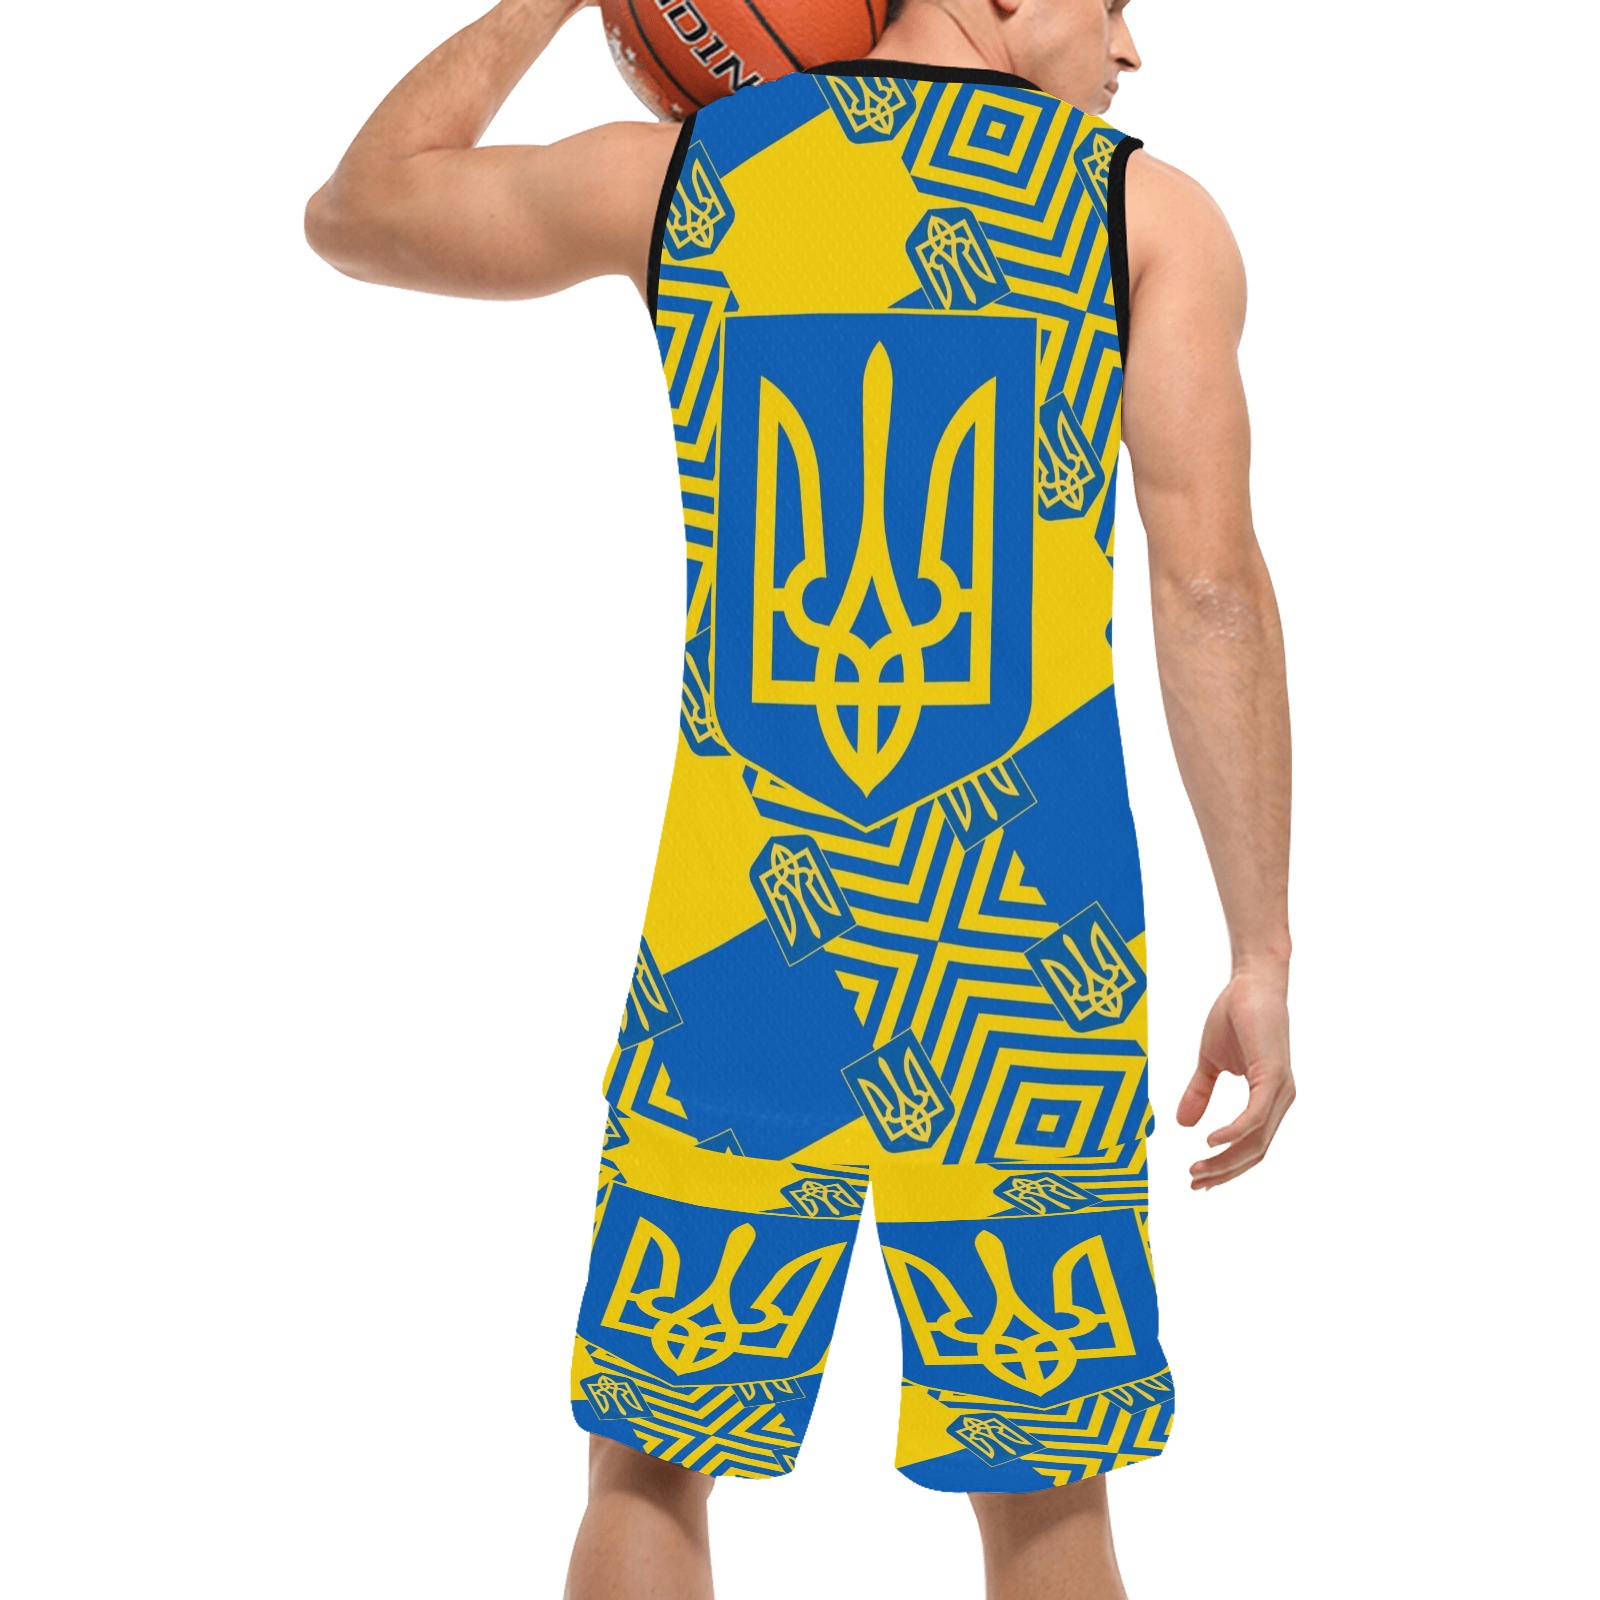 UKRAINE 2 Basketball Uniform with Pocket